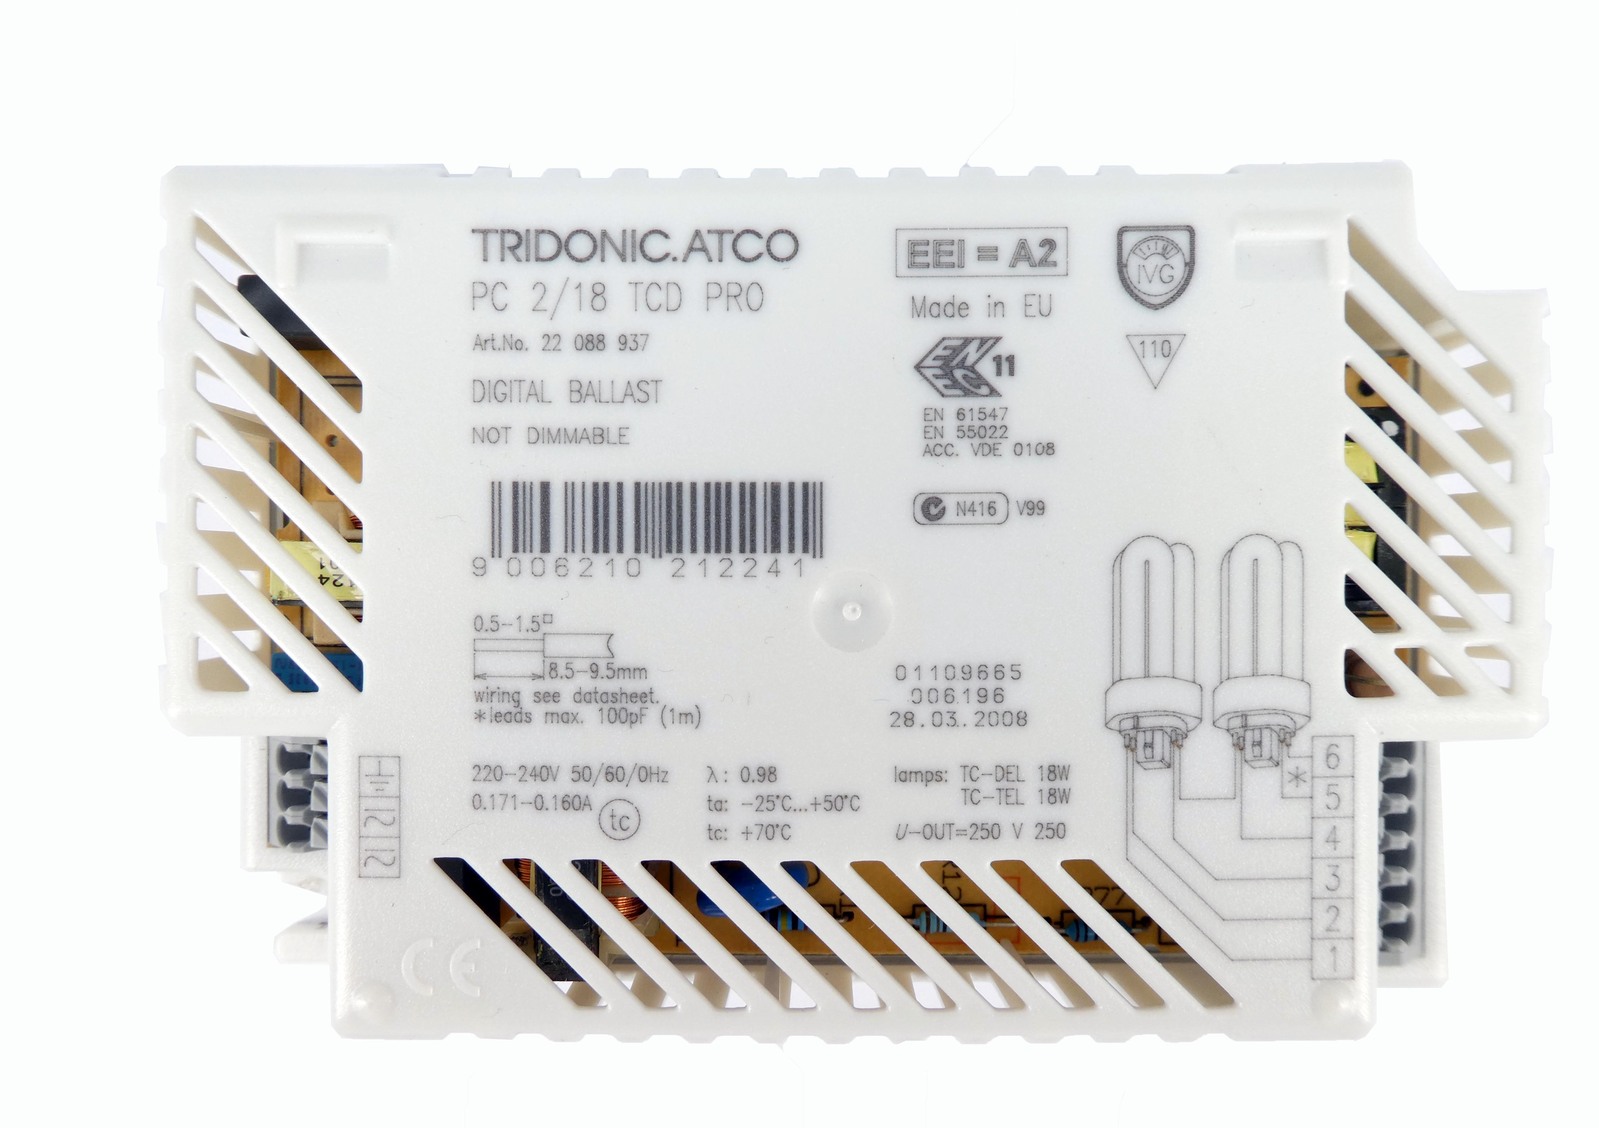 Tridonic Atco Digital Ballast PC 2/18 T8 Pro 2 x 18w for 600mmx600mm Modular 